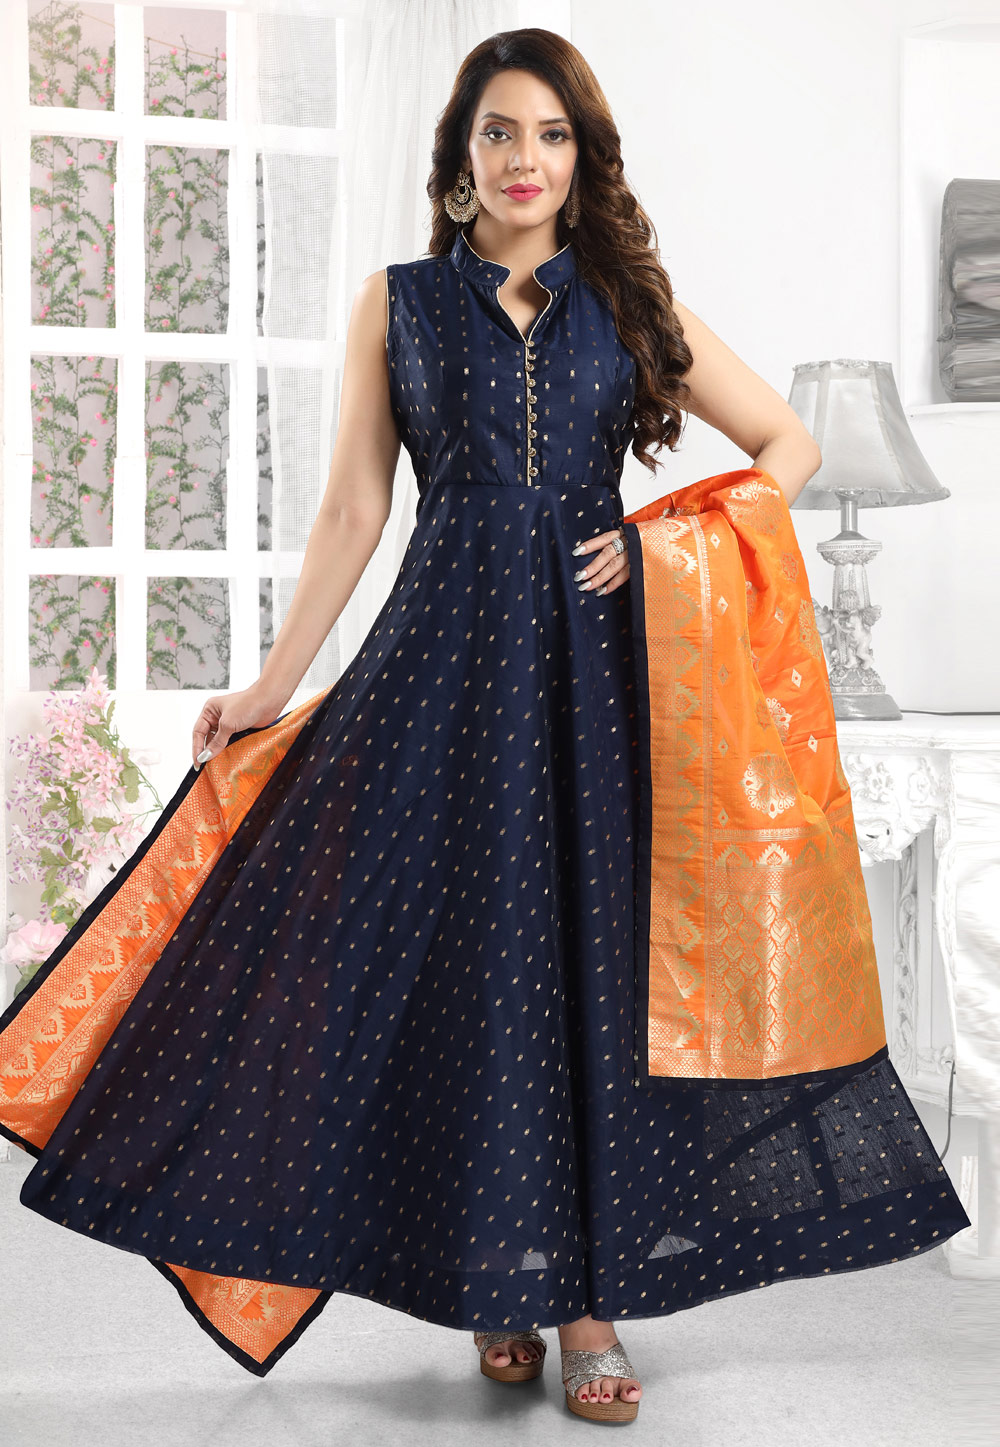 Readymade Anarkali Churidhars - Chanderi cotton with silk | Anarkali dress,  Fashion, Indian dresses